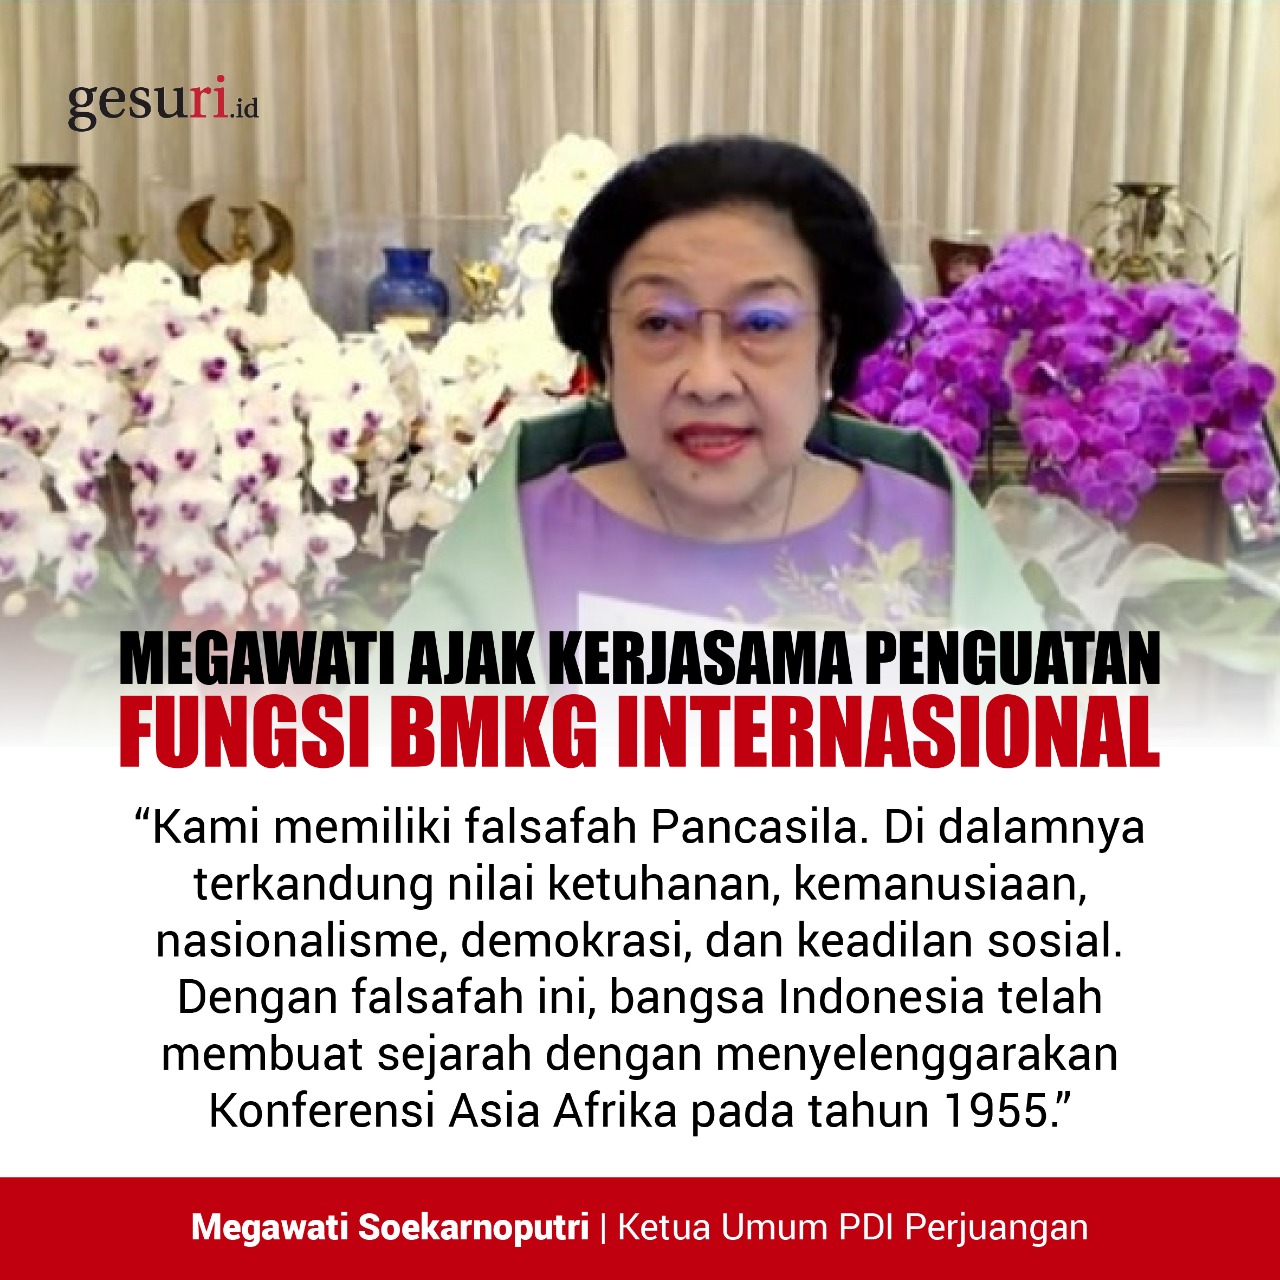 Megawati Ajak Kerjasama Penguatan BMKG Internasional (2/3)